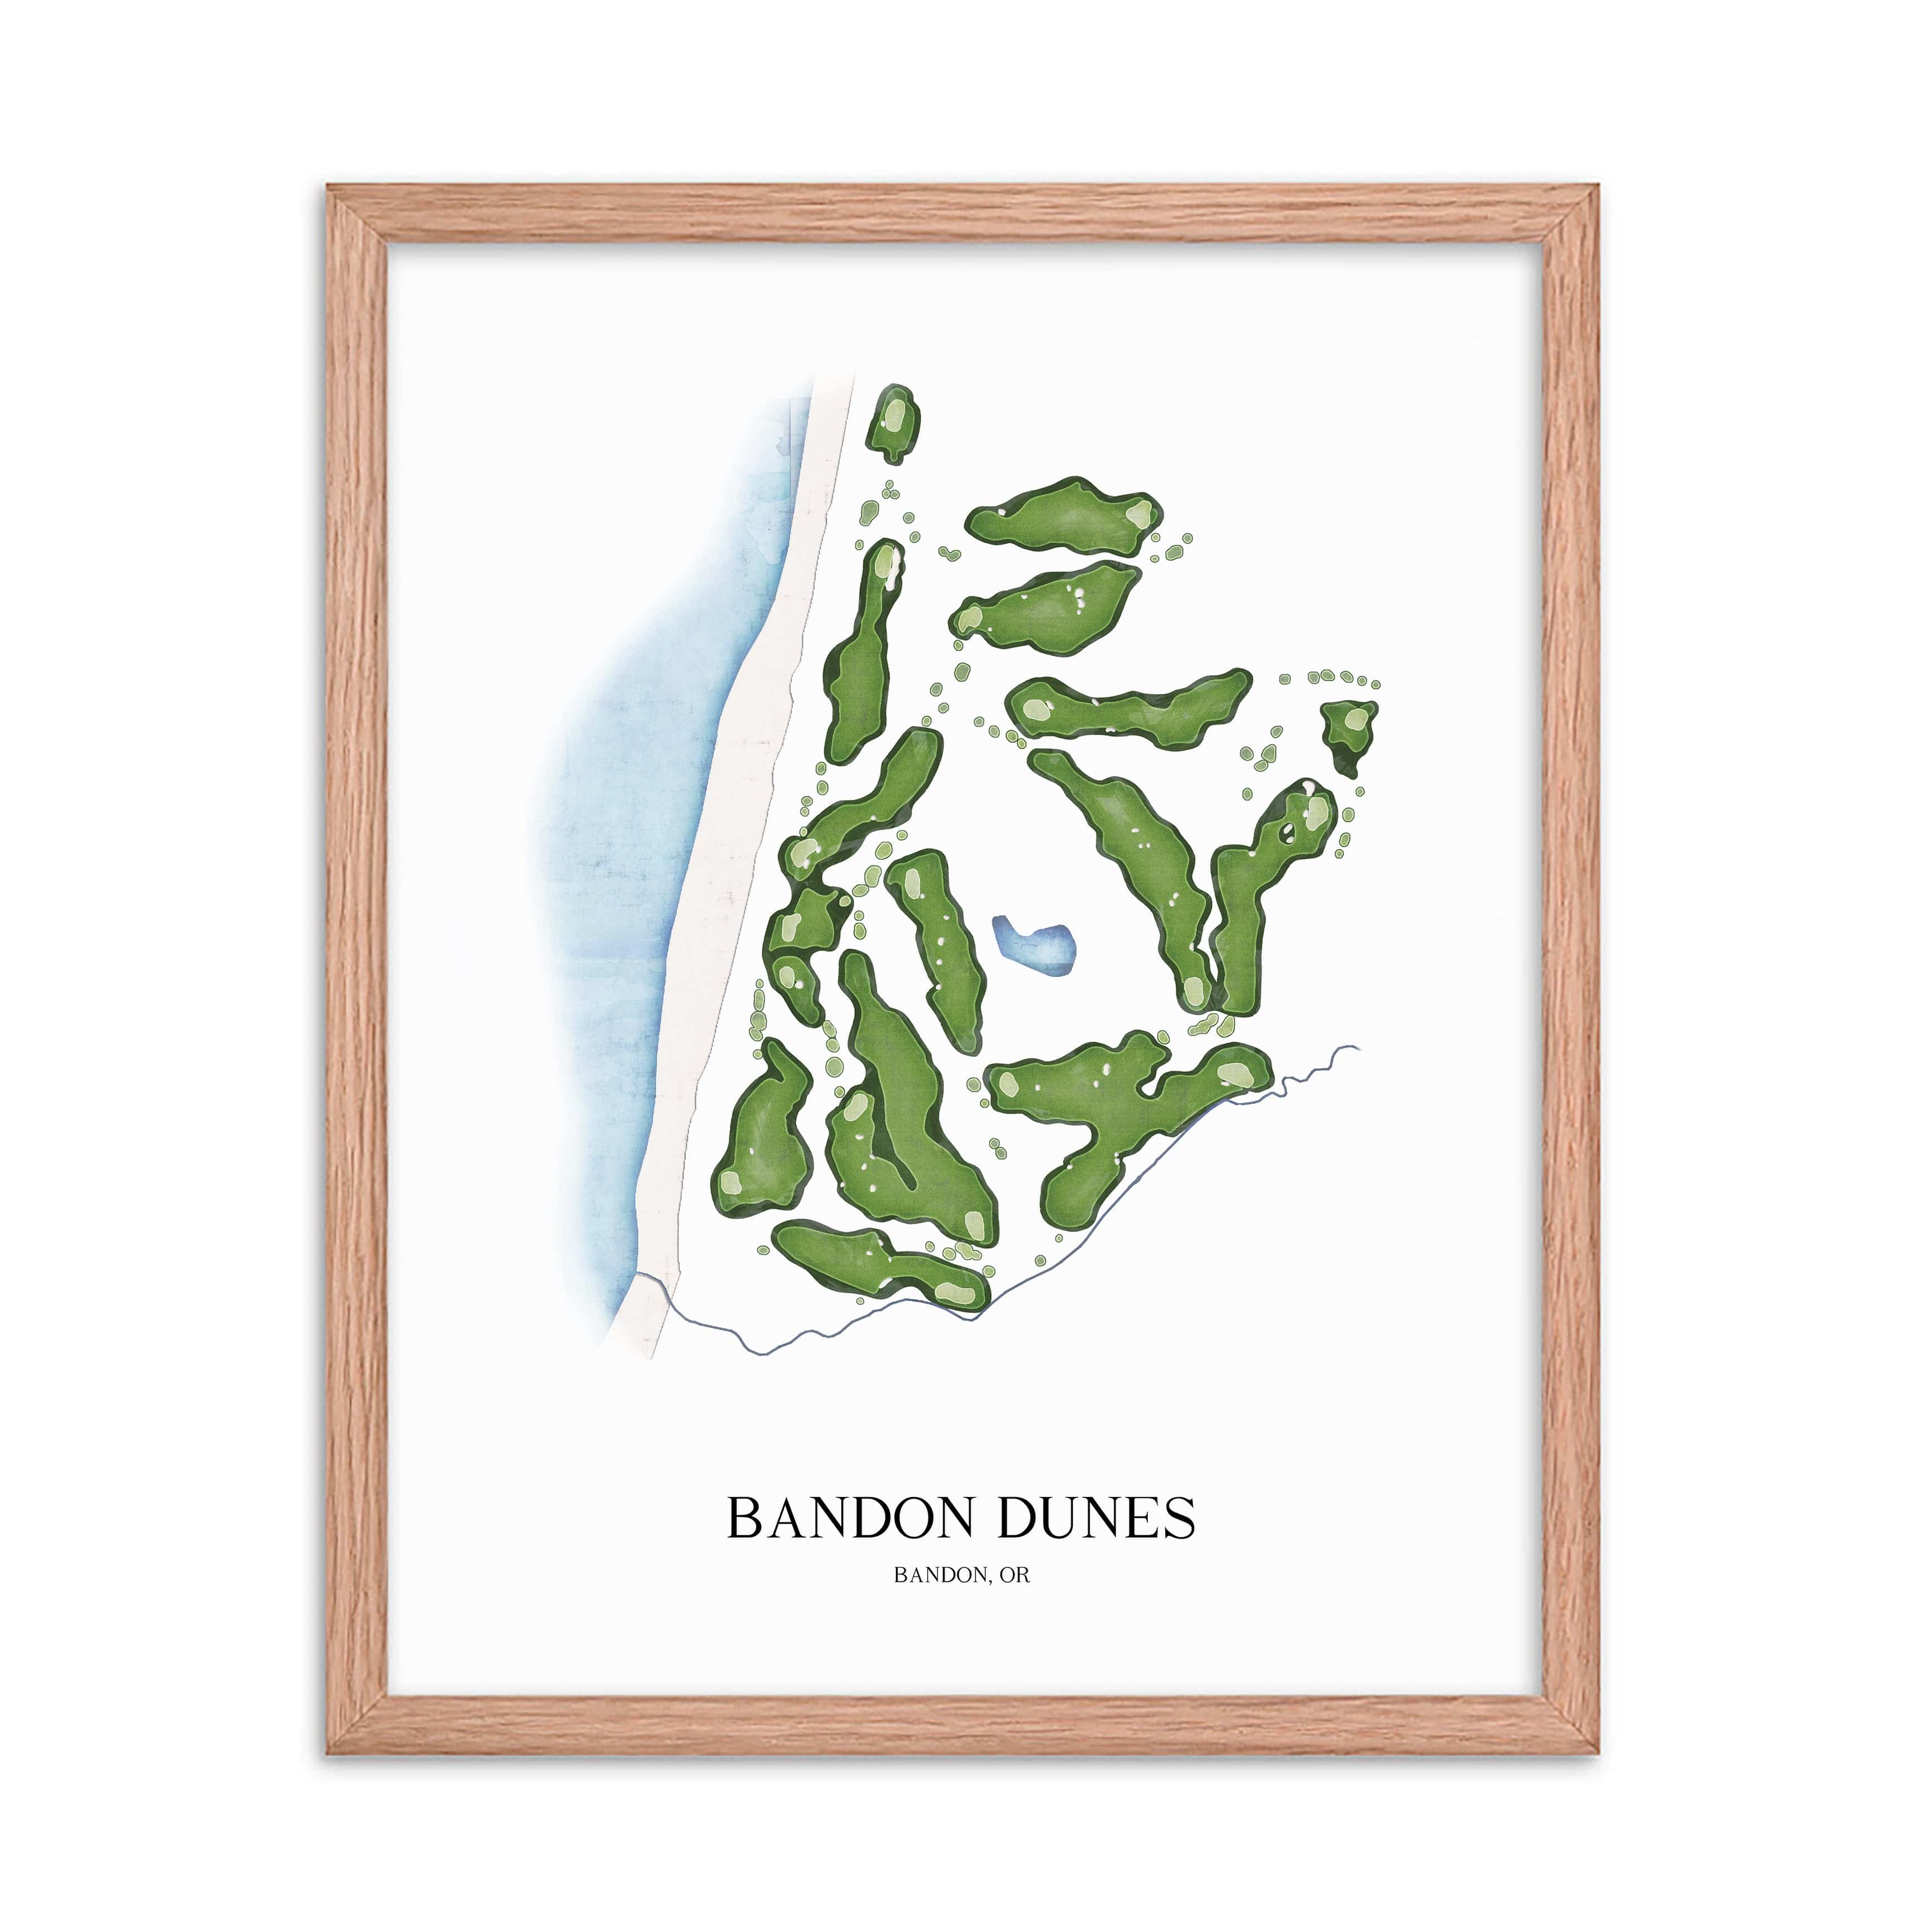 The 19th Hole Golf Shop - Golf Course Prints -  8" x 10" / Oak Bandon Dunes Golf Course Map